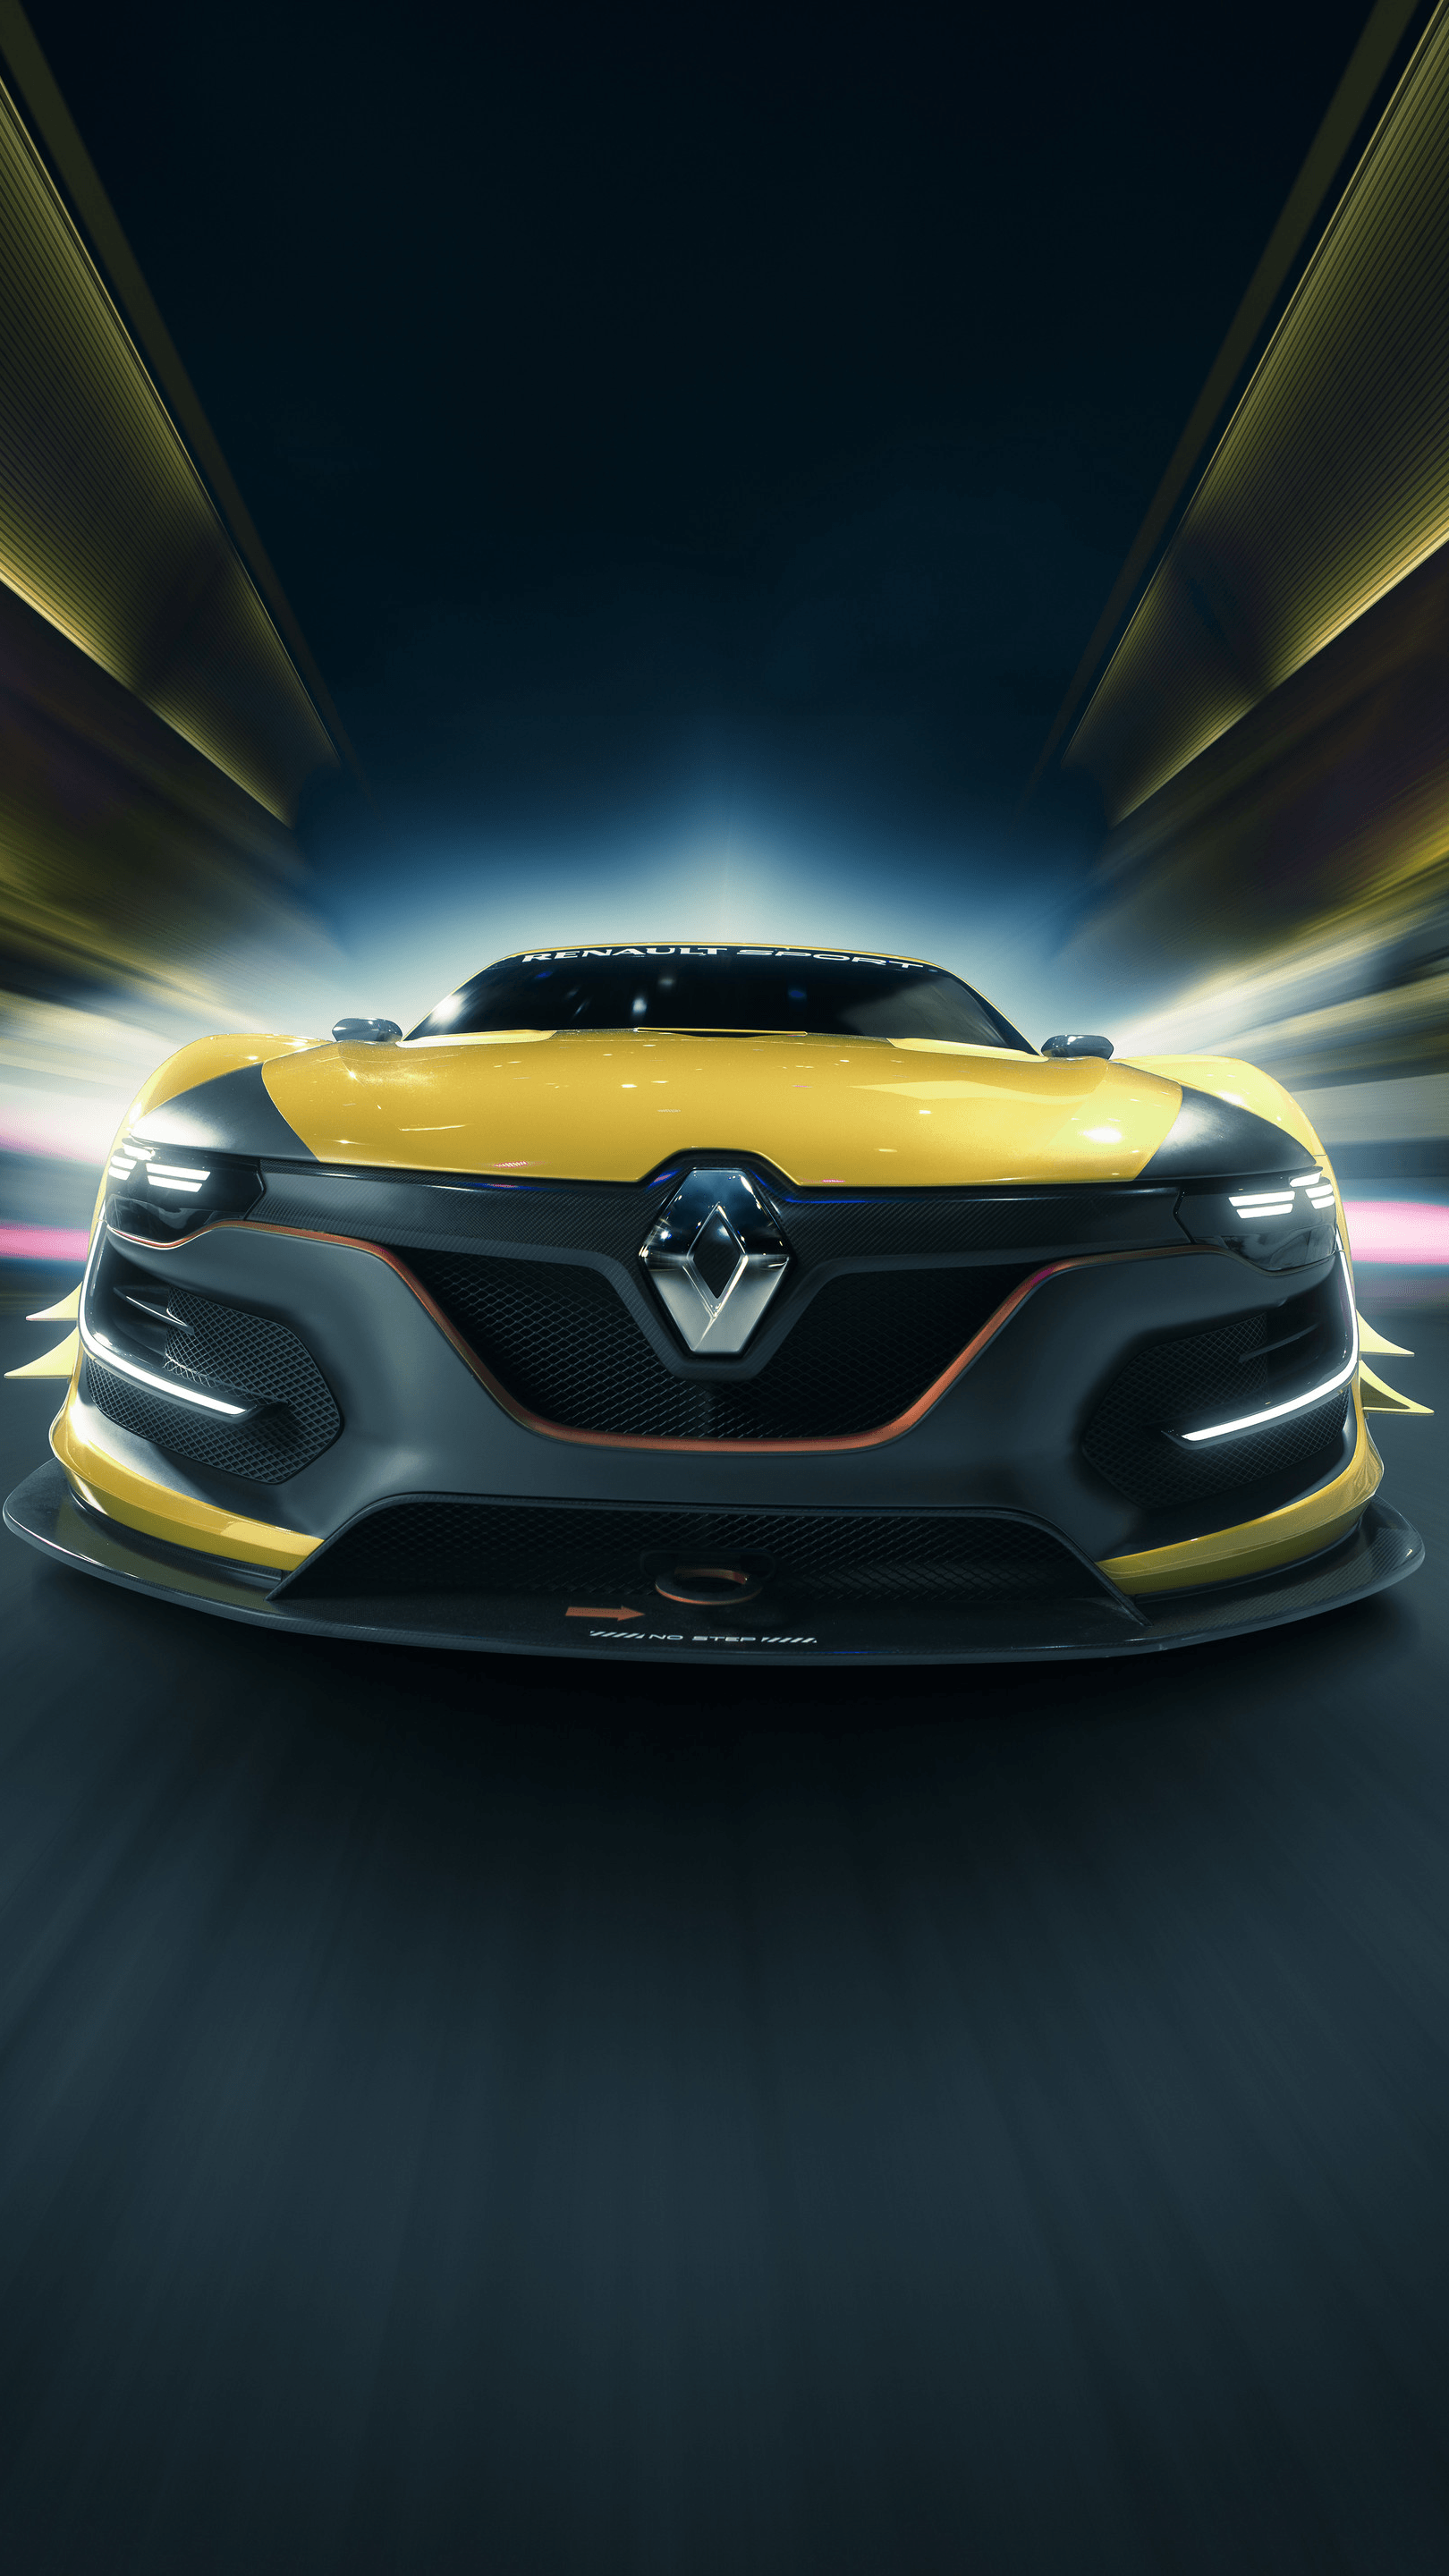 Download the Menage Renault Sport Wallpaper, Menage Renault